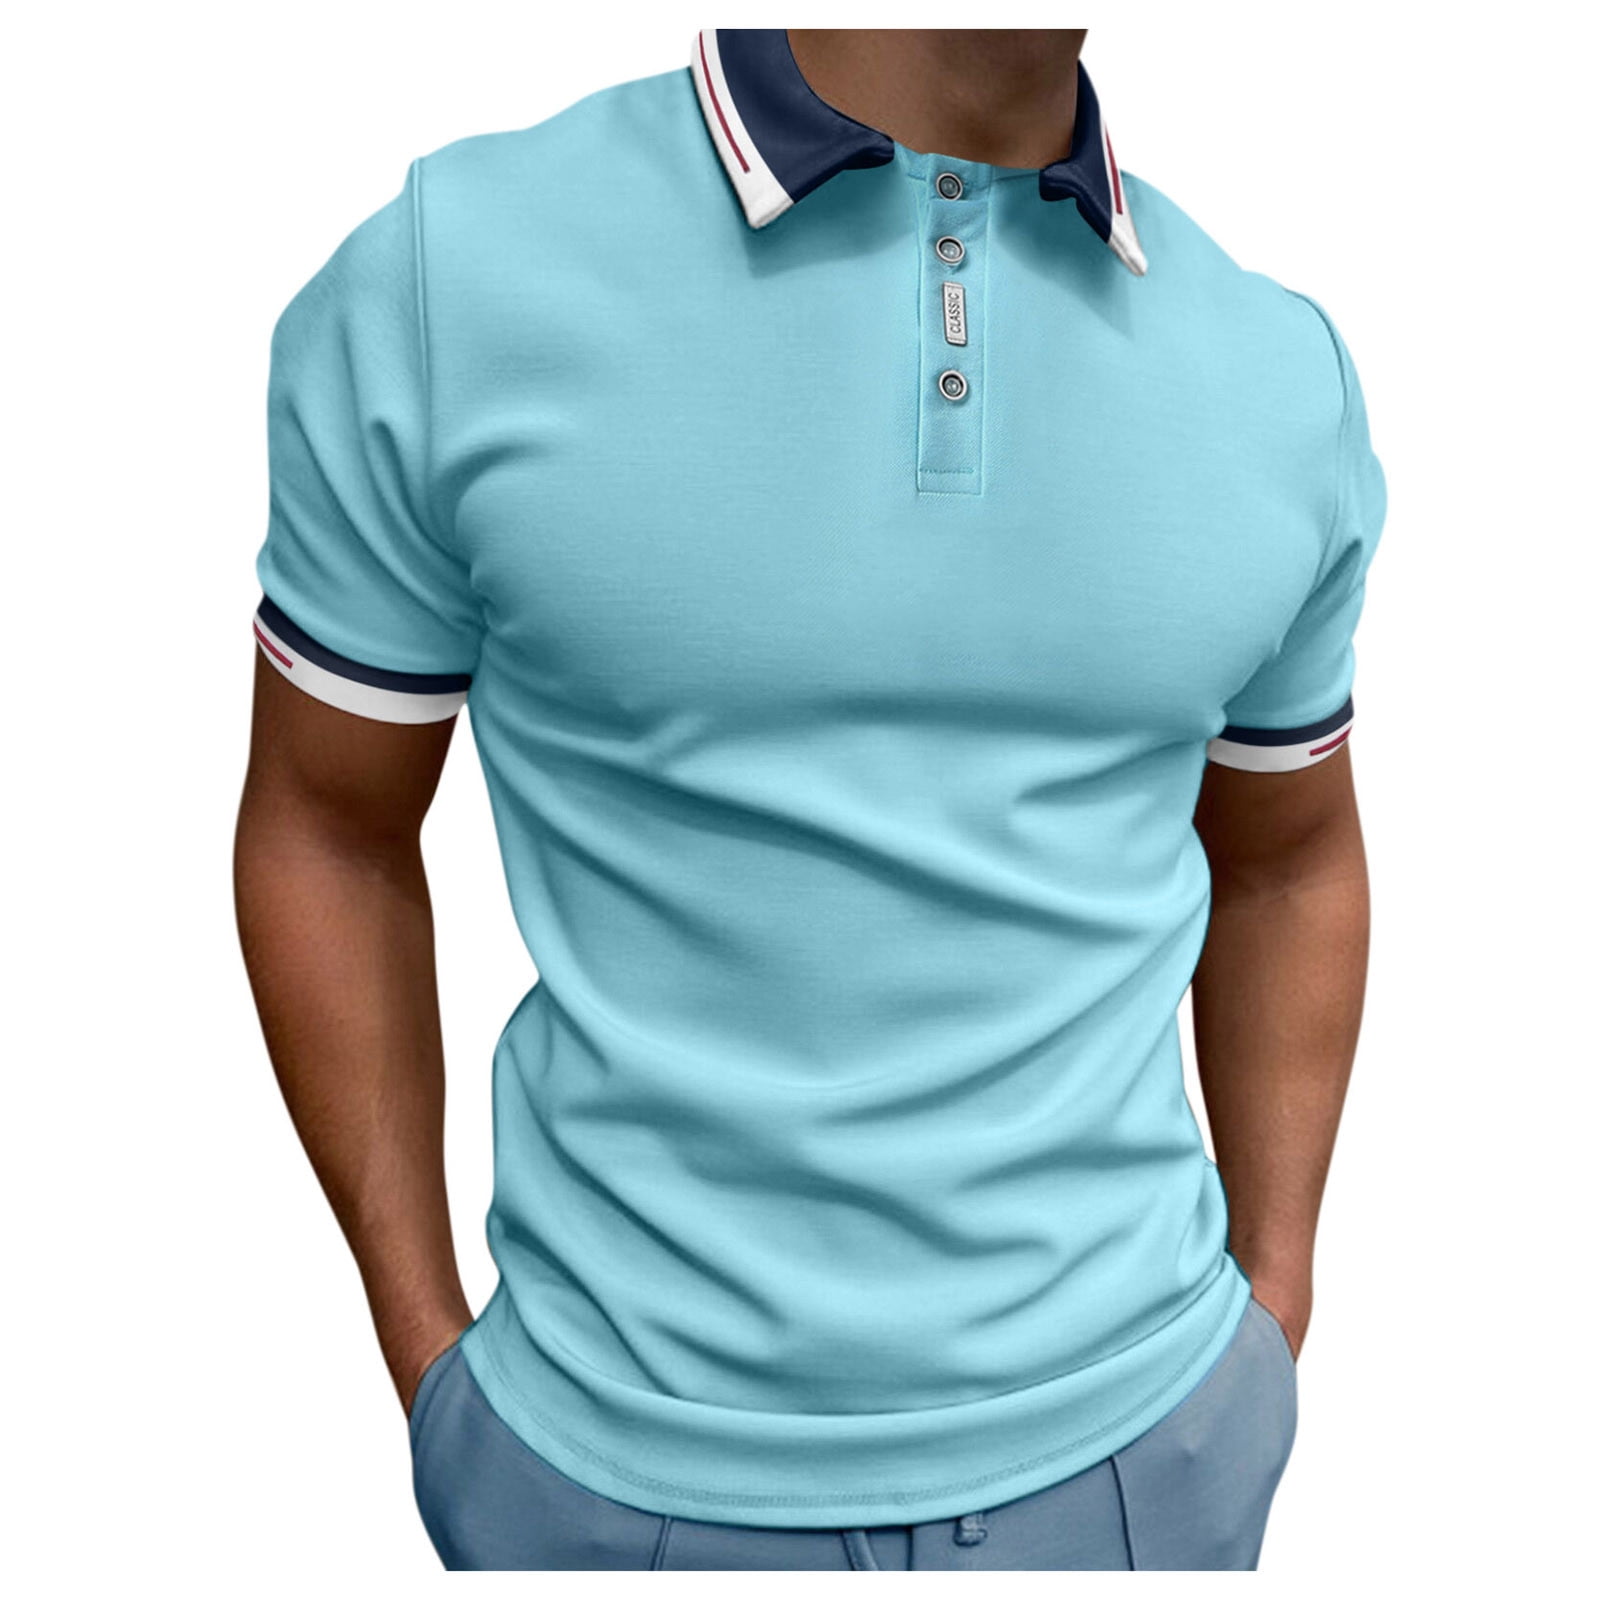 kpoplk Men's Polo Shirts Short Casual Sports Outdoor Golf Shirt with Pocket Mens Polo Shirts(3XL,Light - Walmart.com